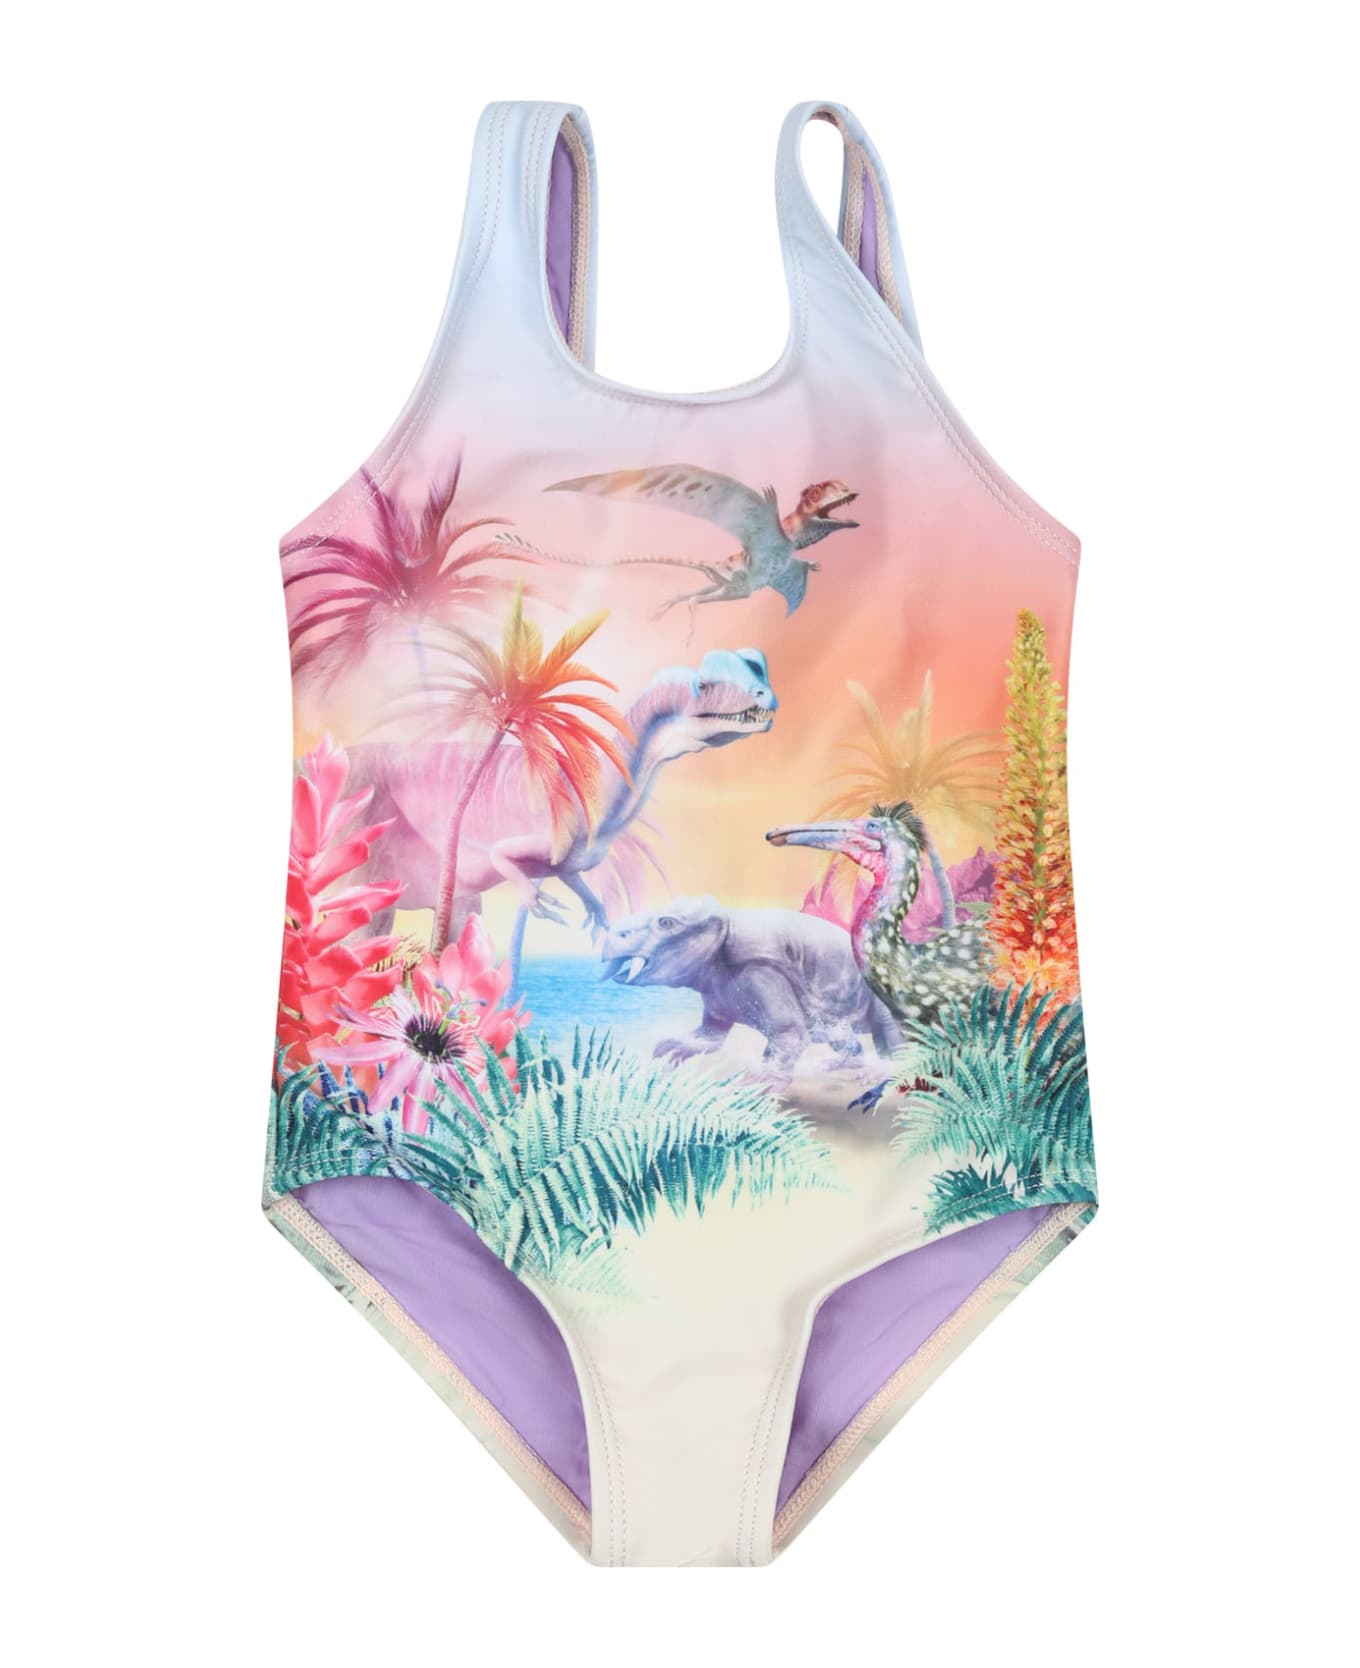 Molo Purple One-piece Swimsuit For Bebe Girl With Dinosaur Print - Multicolor 水着